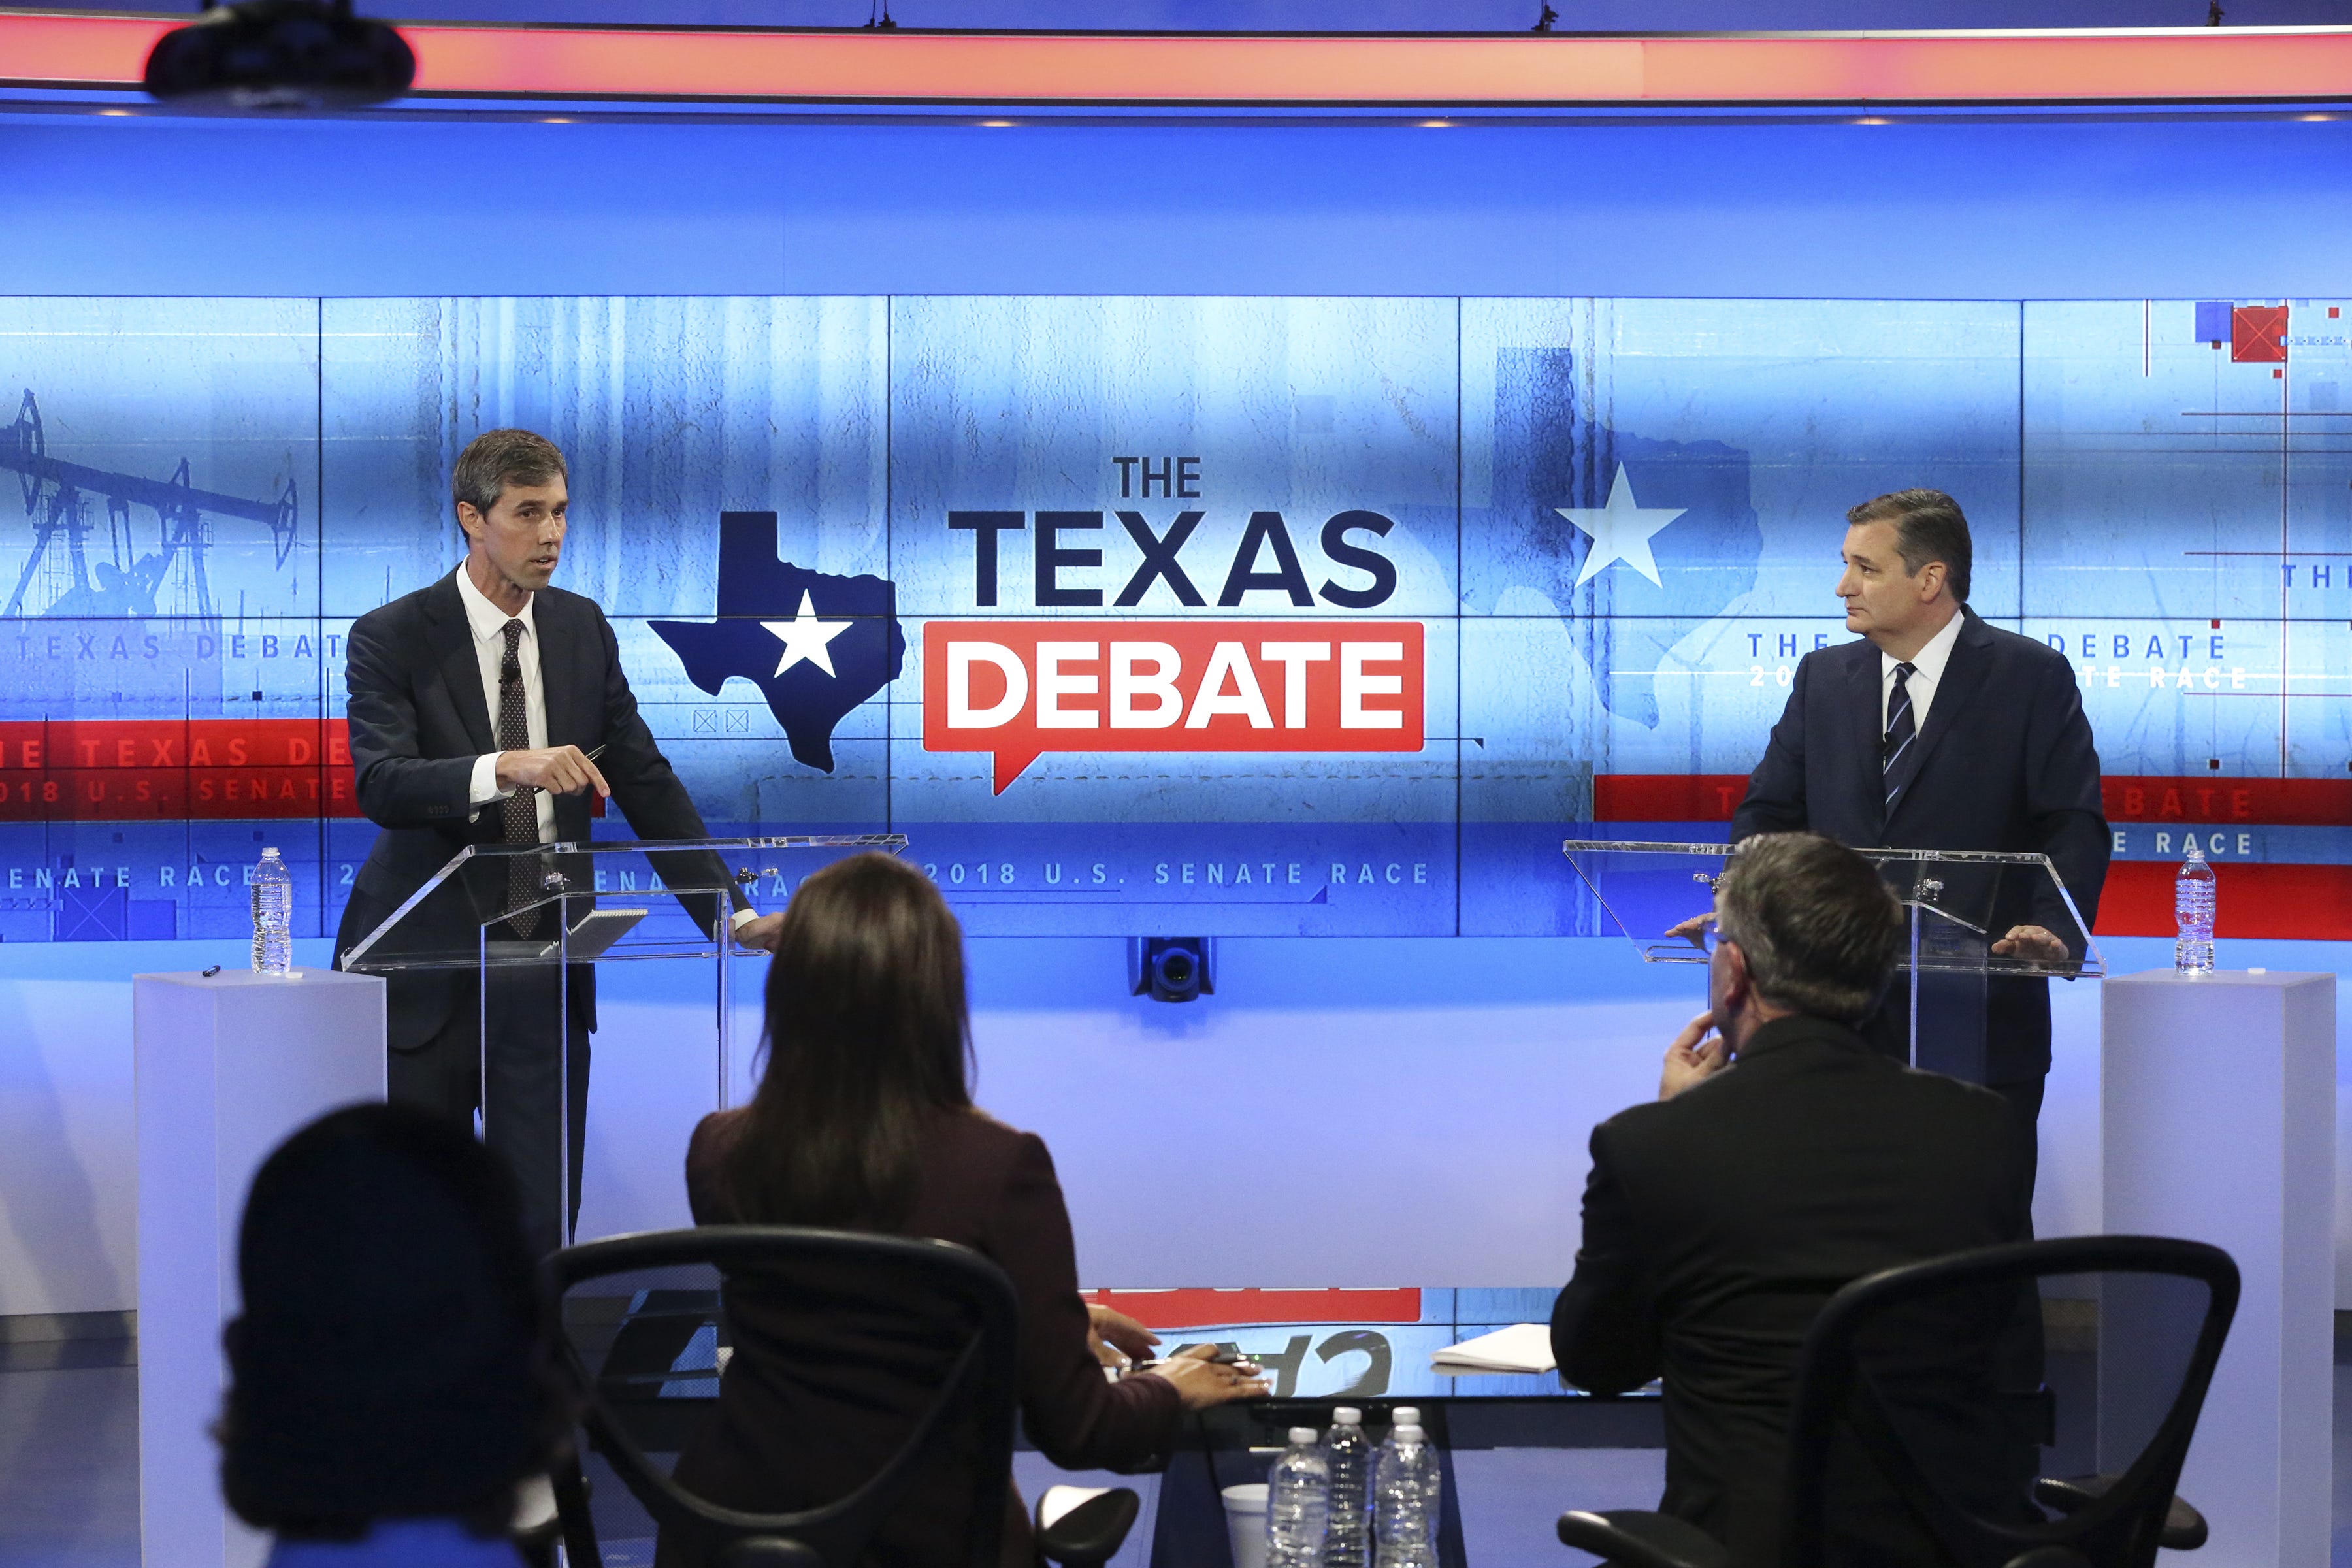 U.S. Rep. Beto O'Rourke (D-TX) (L) and U.S. Sen. Ted Cruz (R-TX) face off in a debate at the KENS 5 studios on Oct. 16, 2018 in San Antonio, Texas.